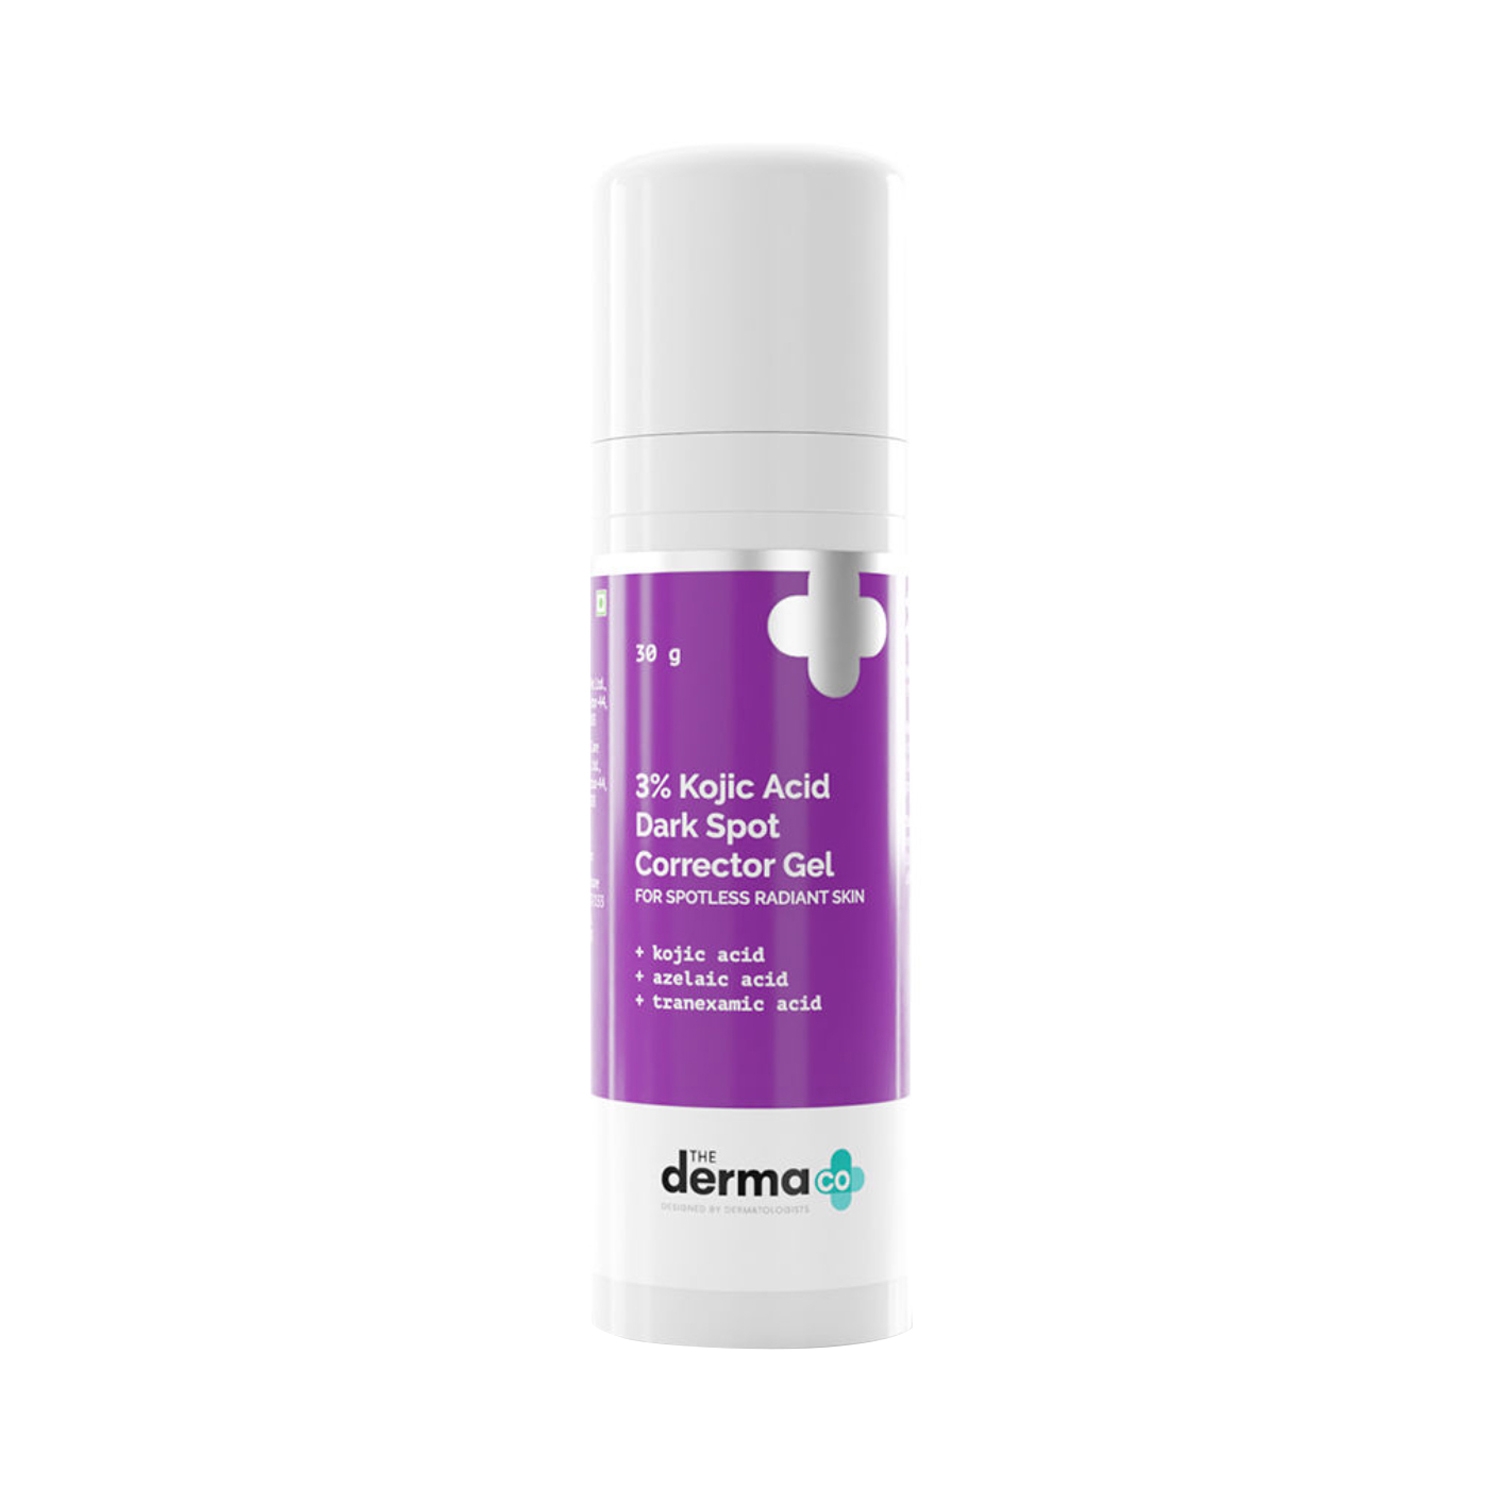 The Derma Co | The Derma Co 3% Kojic Acid Dark Spot Corrector Gel (30g)